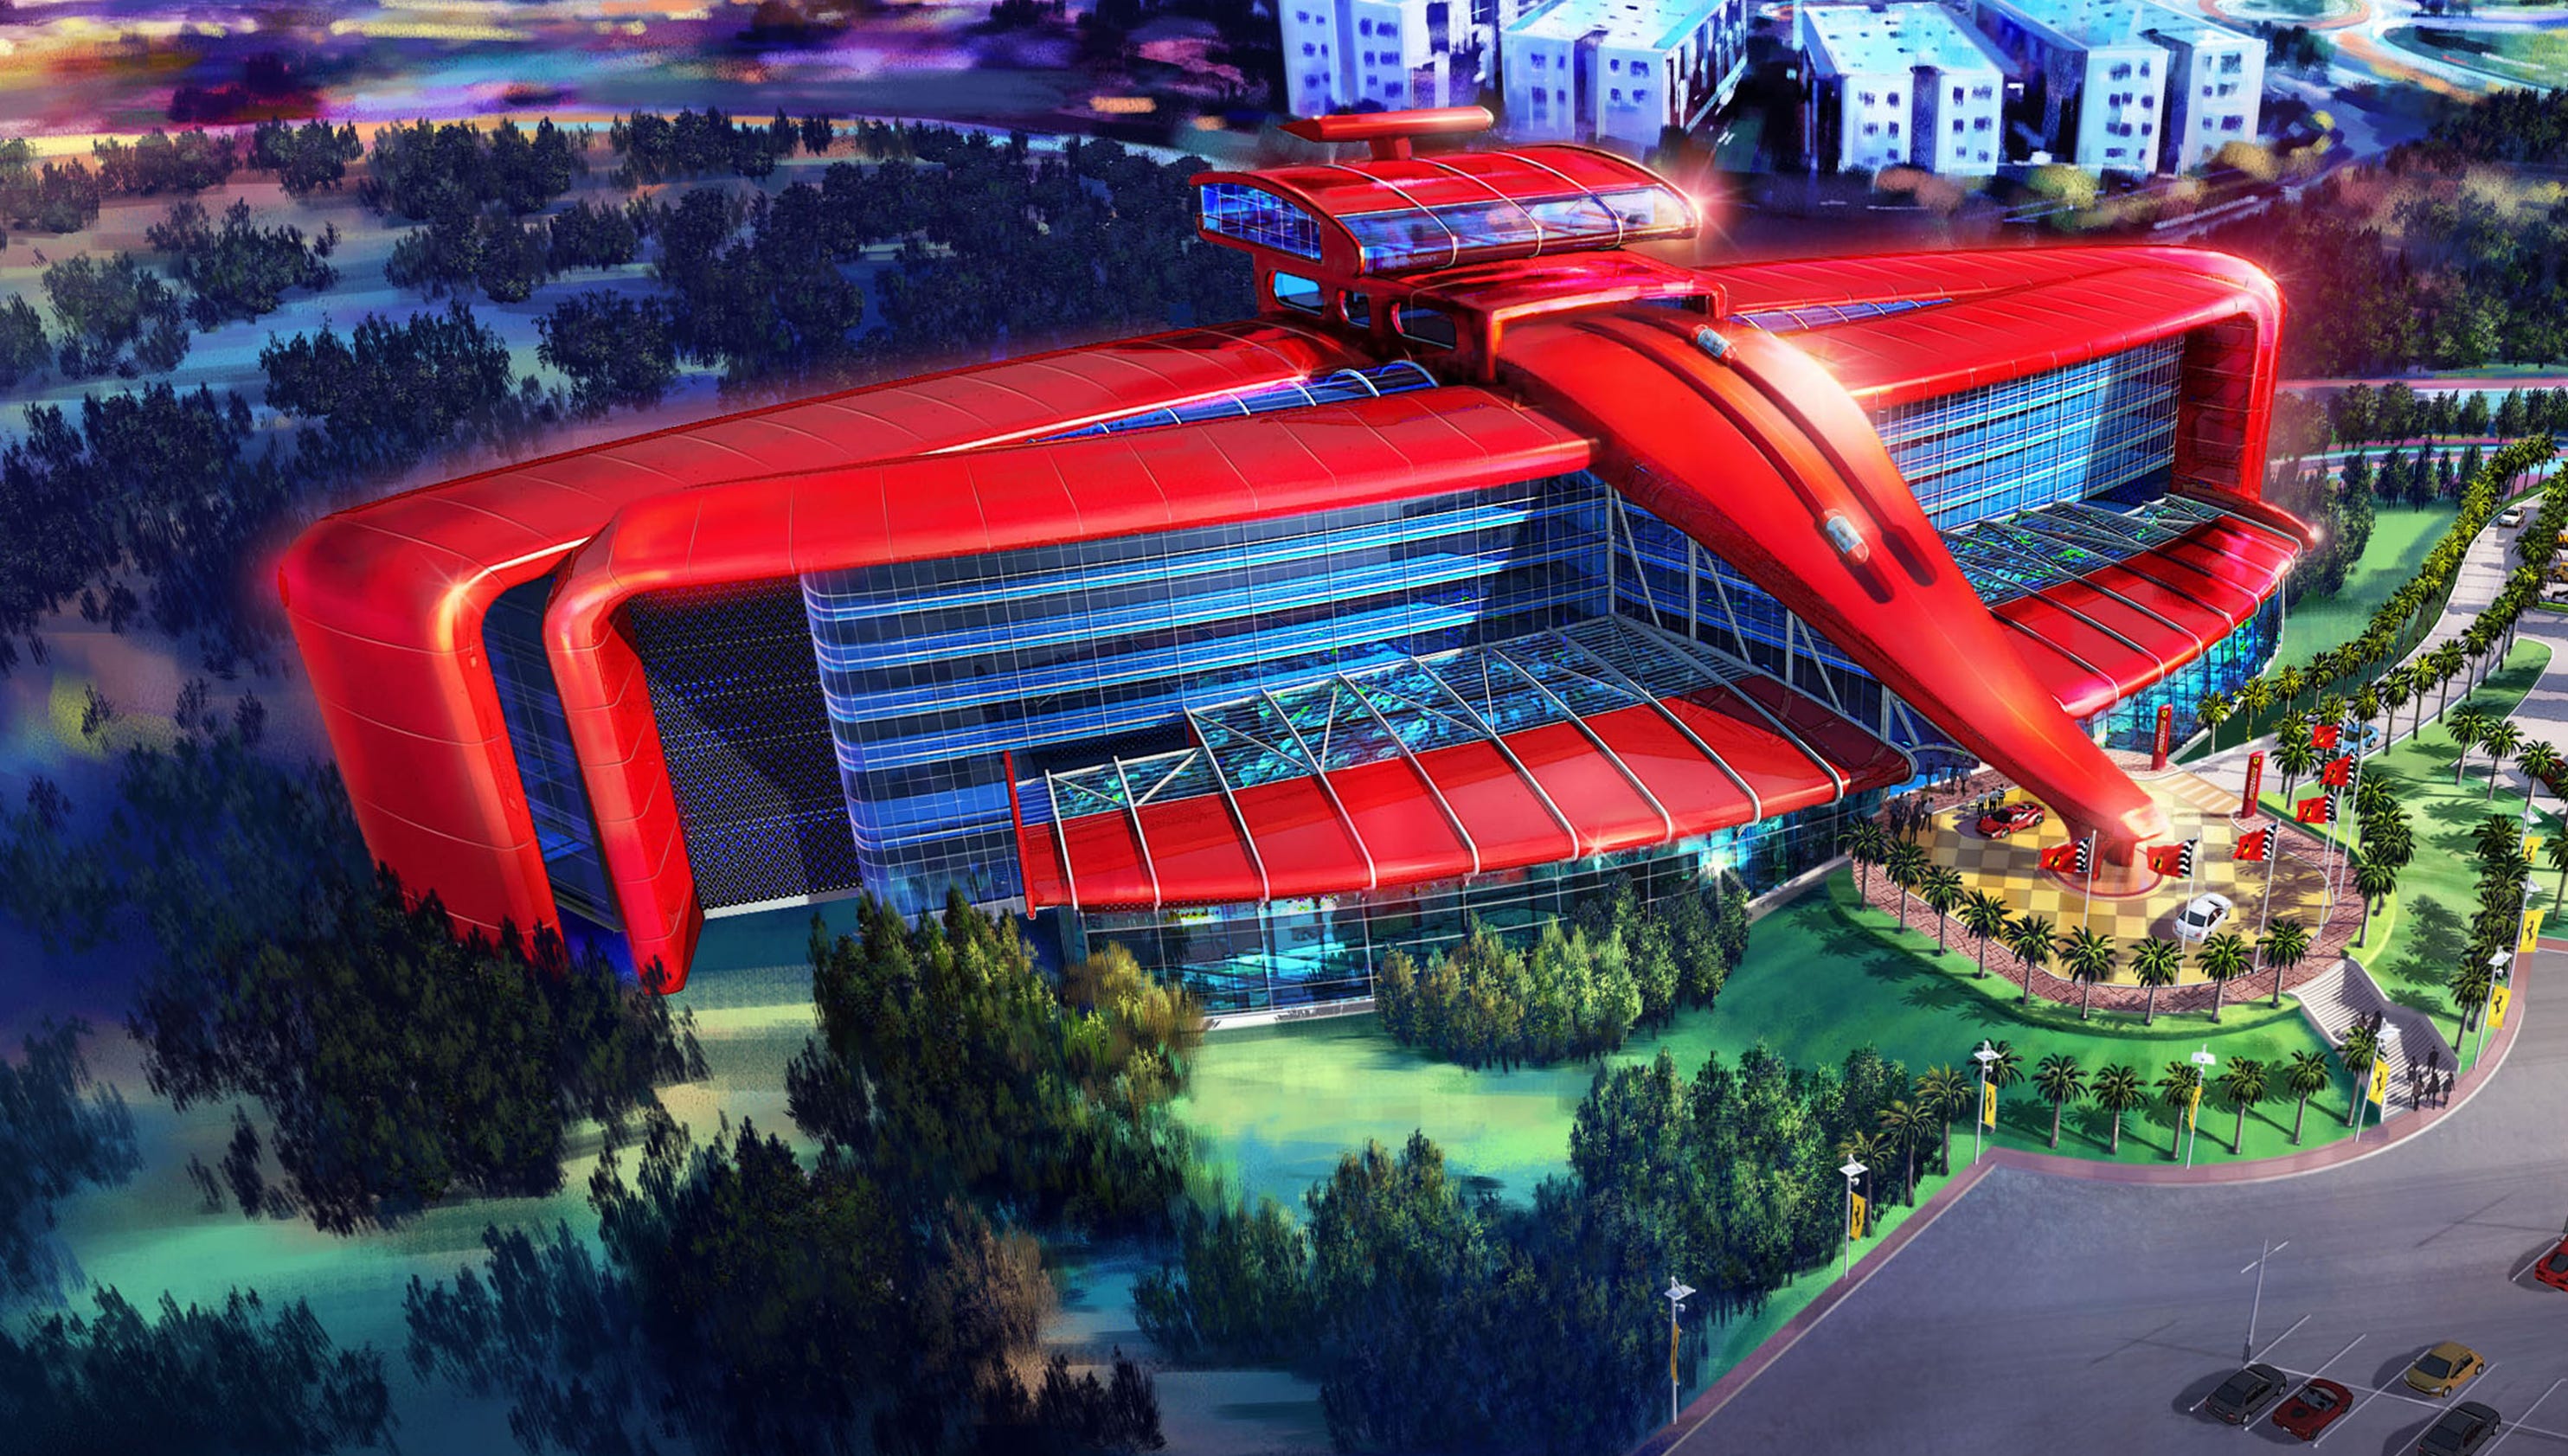 Ferrari Land theme park will have fastest rides